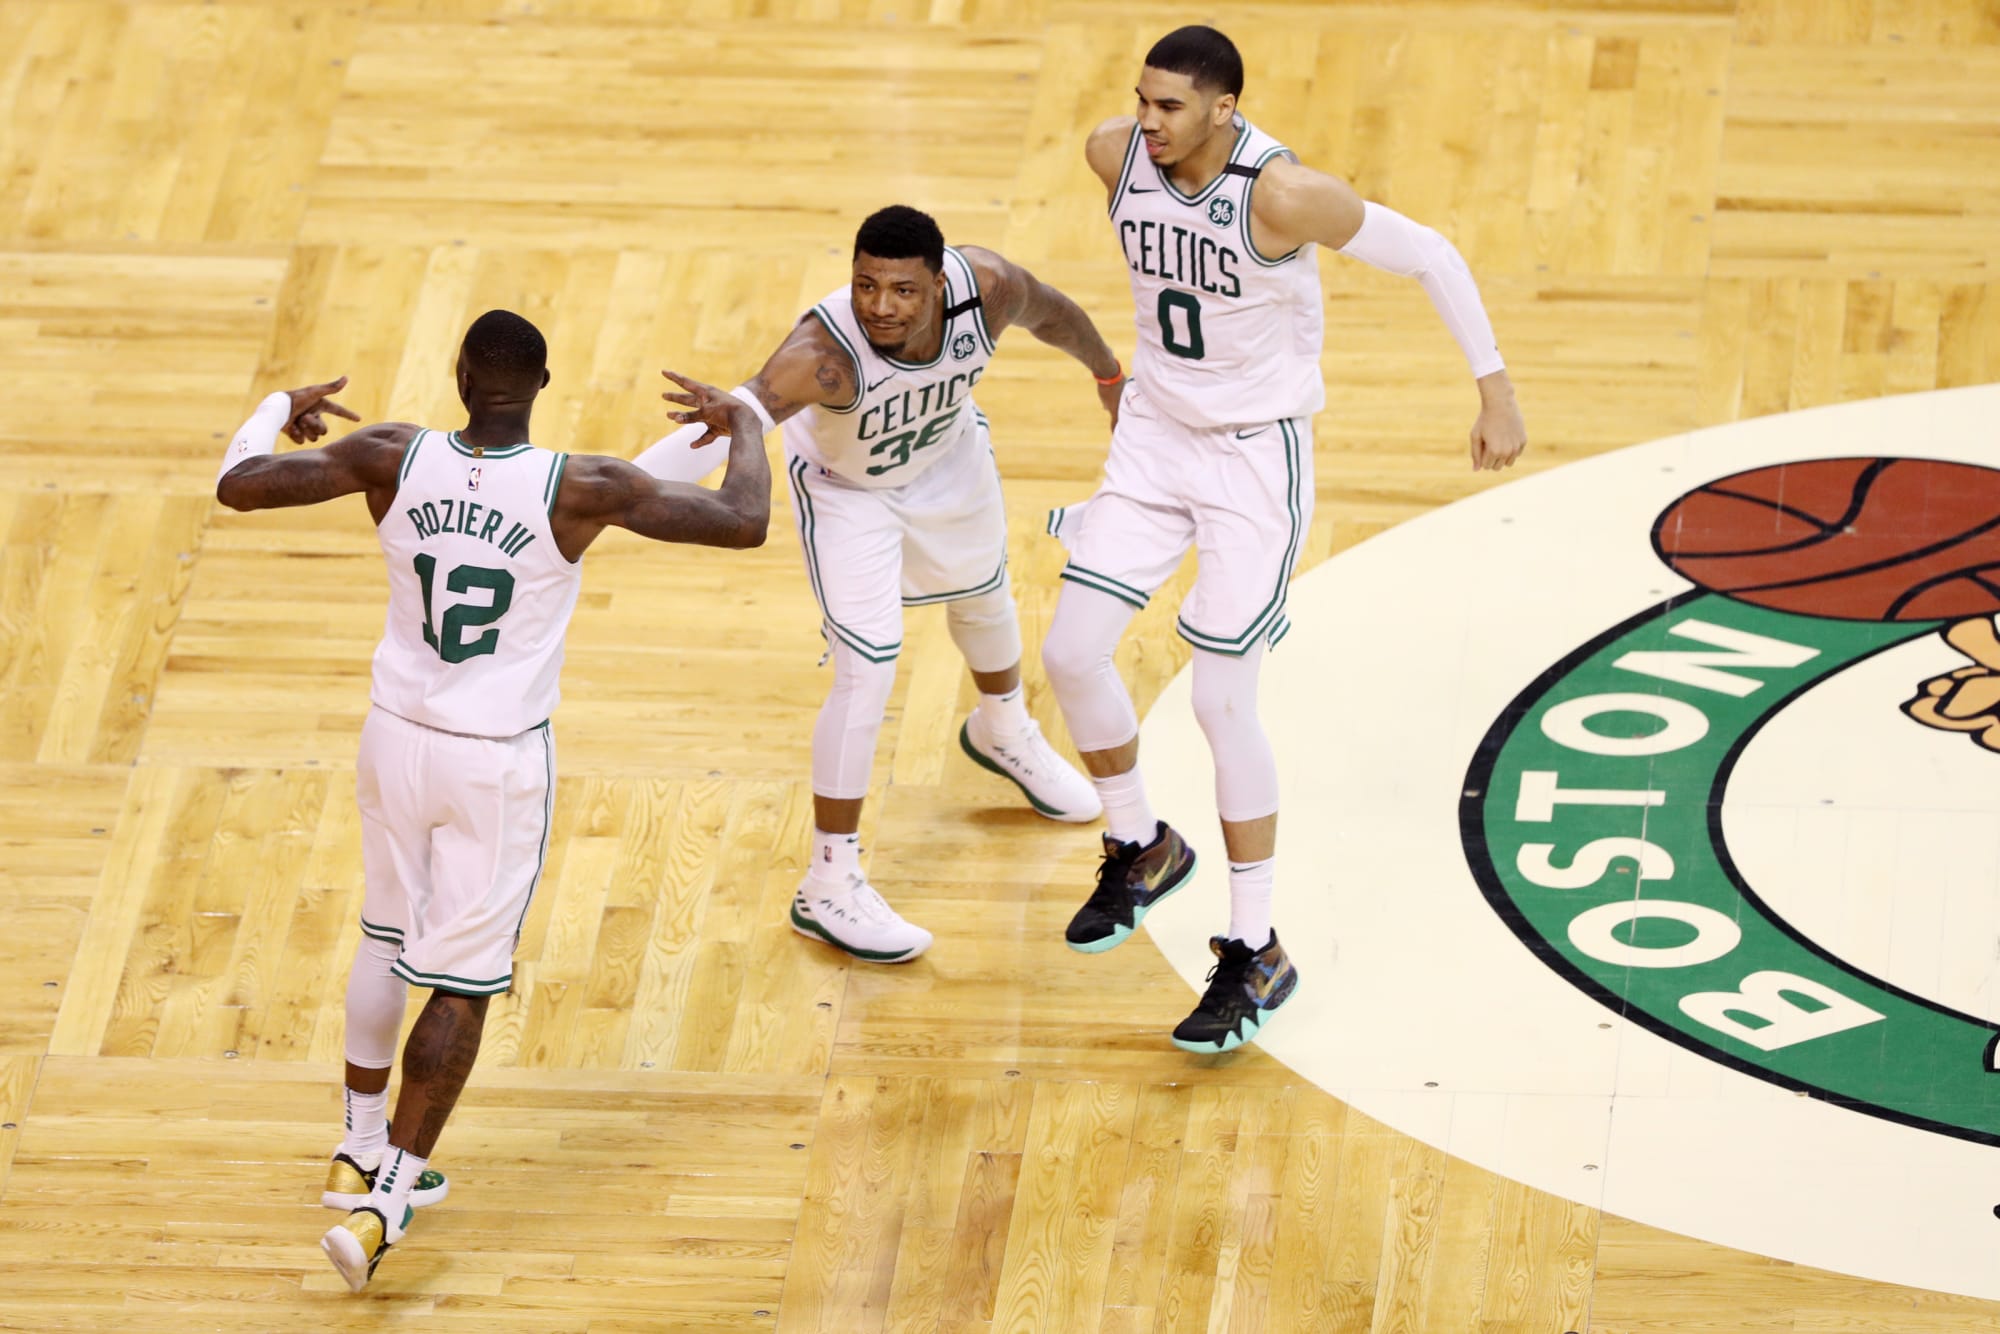 Boston Celtics Playoff success through teamwork and togetherness